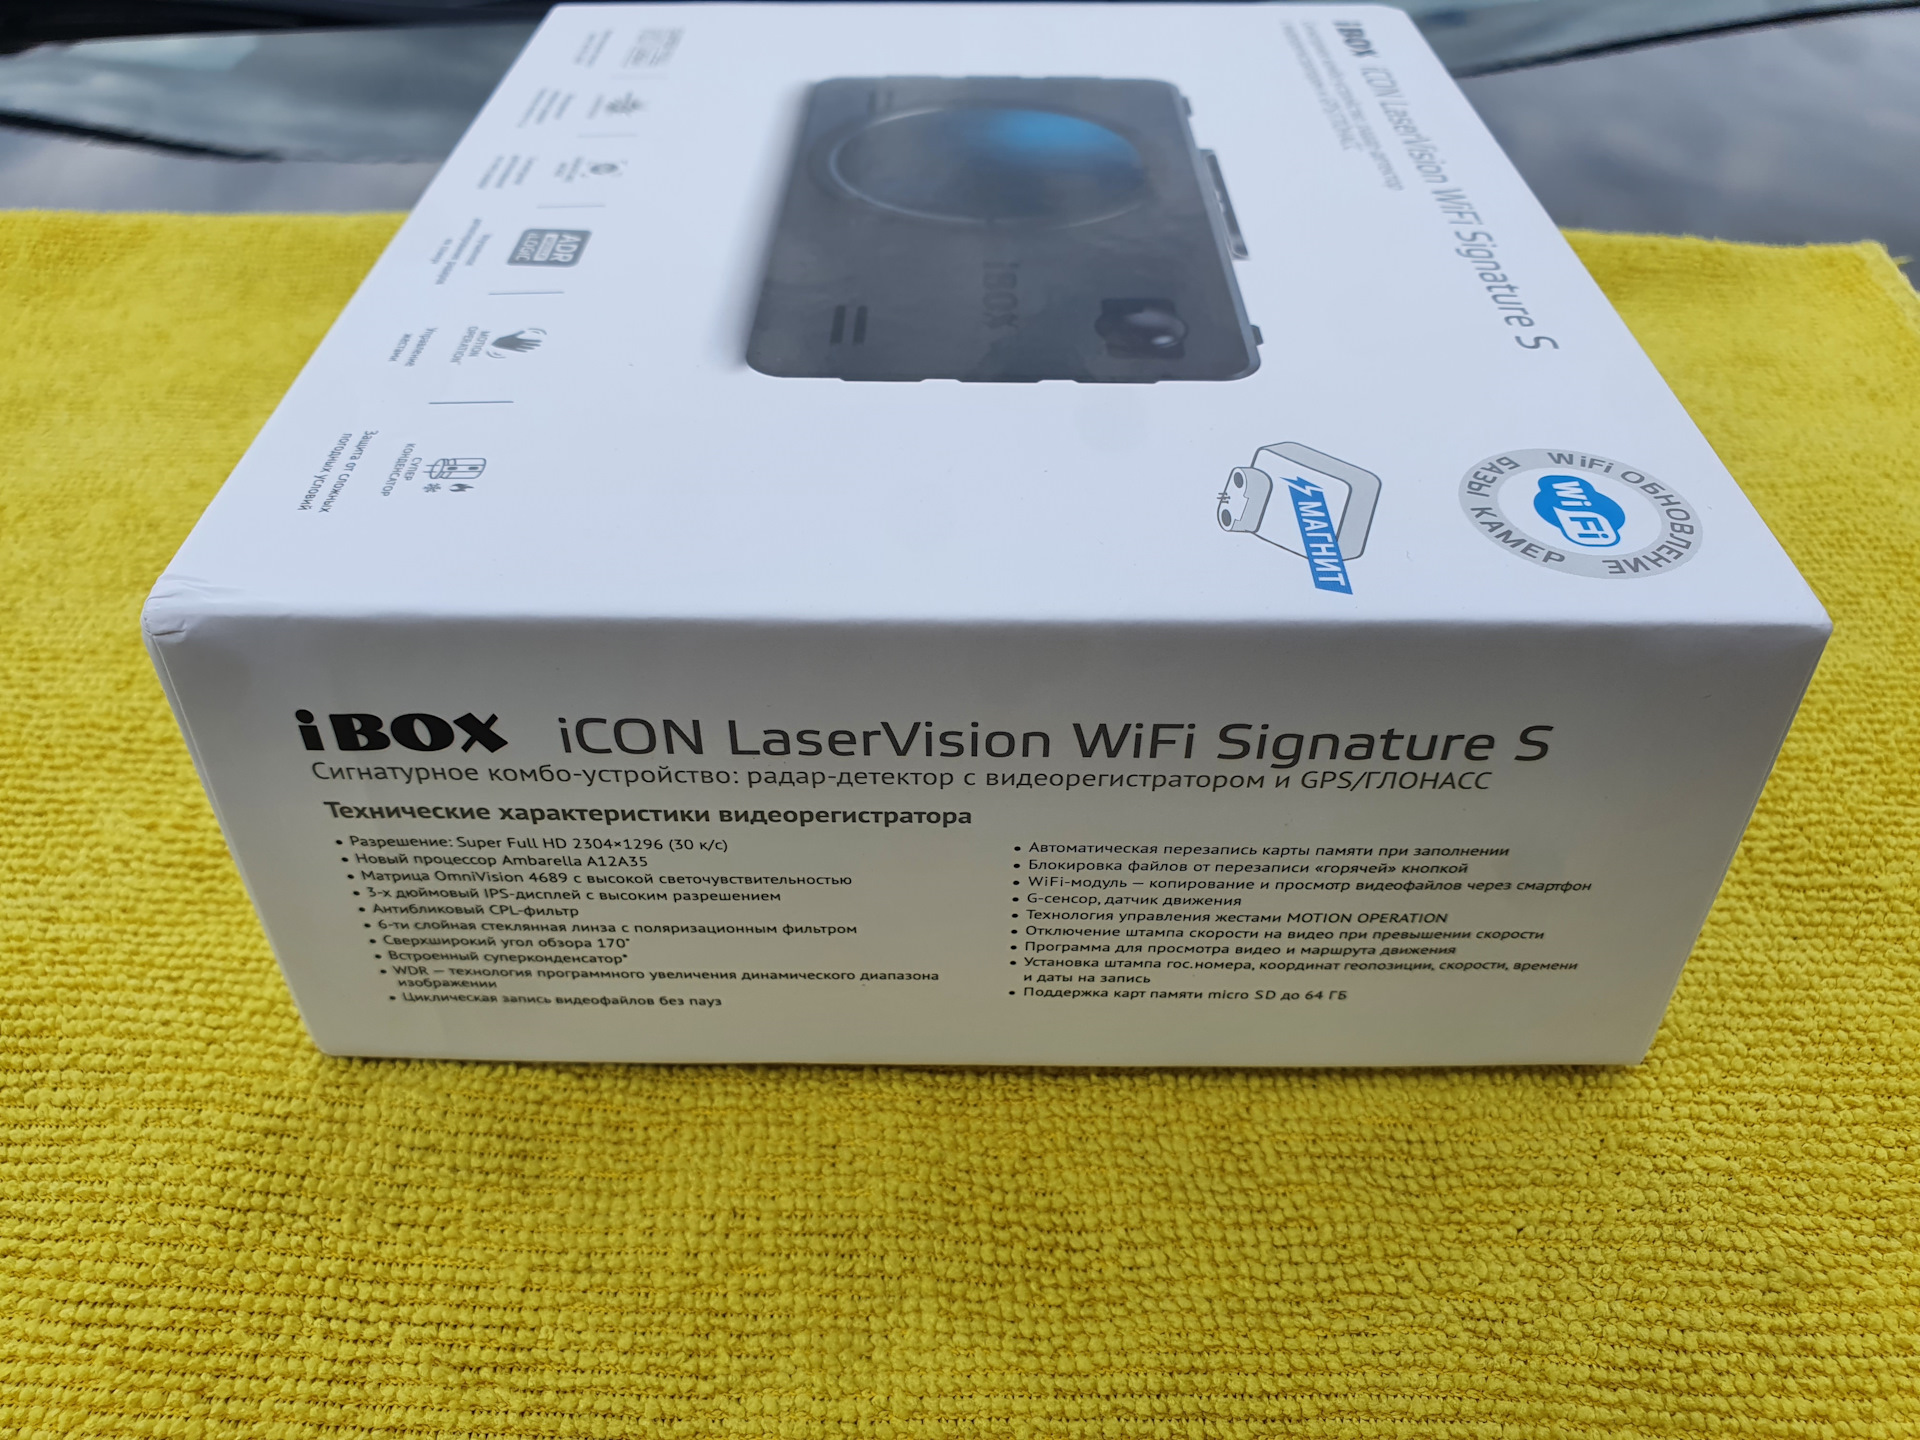 Ibox icon signature купить. IBOX icon Laser Vision WIFI Signature Dual. IBOX Laser Vision WIFI Signature s. IBOX icon laservision WIFI Signature. IBOX one Laser Vision Wi Fi Signature.